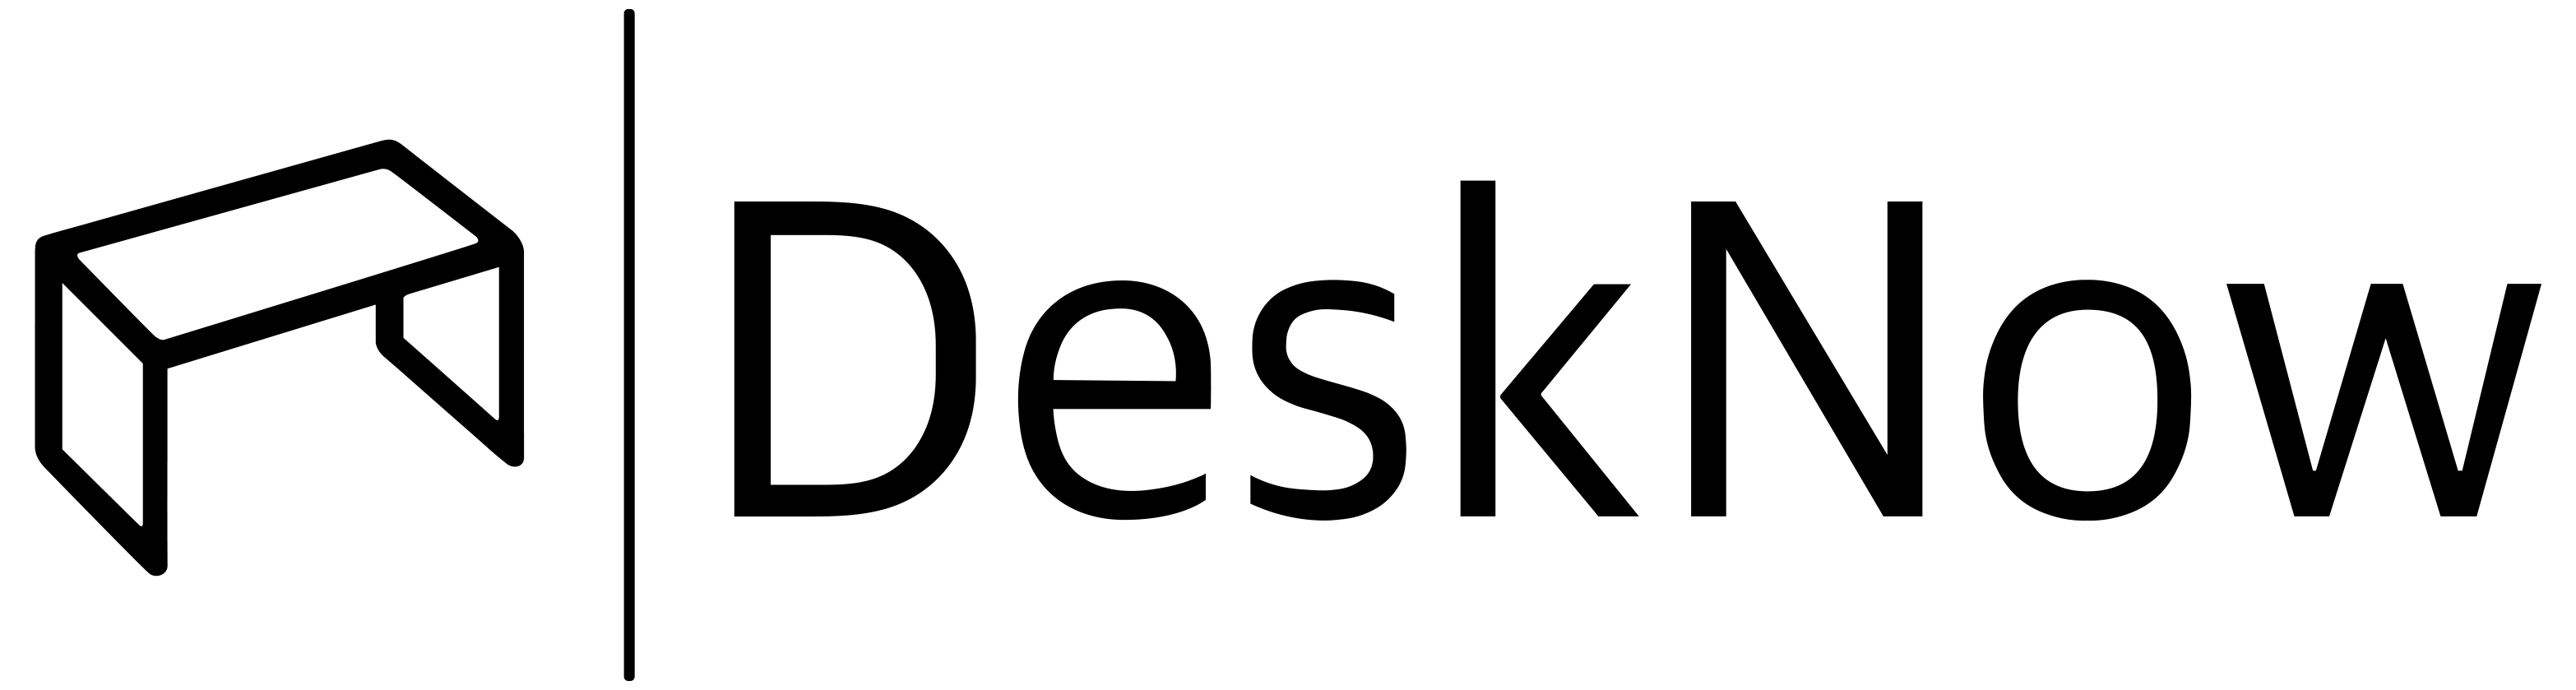 DeskNow Logo-3